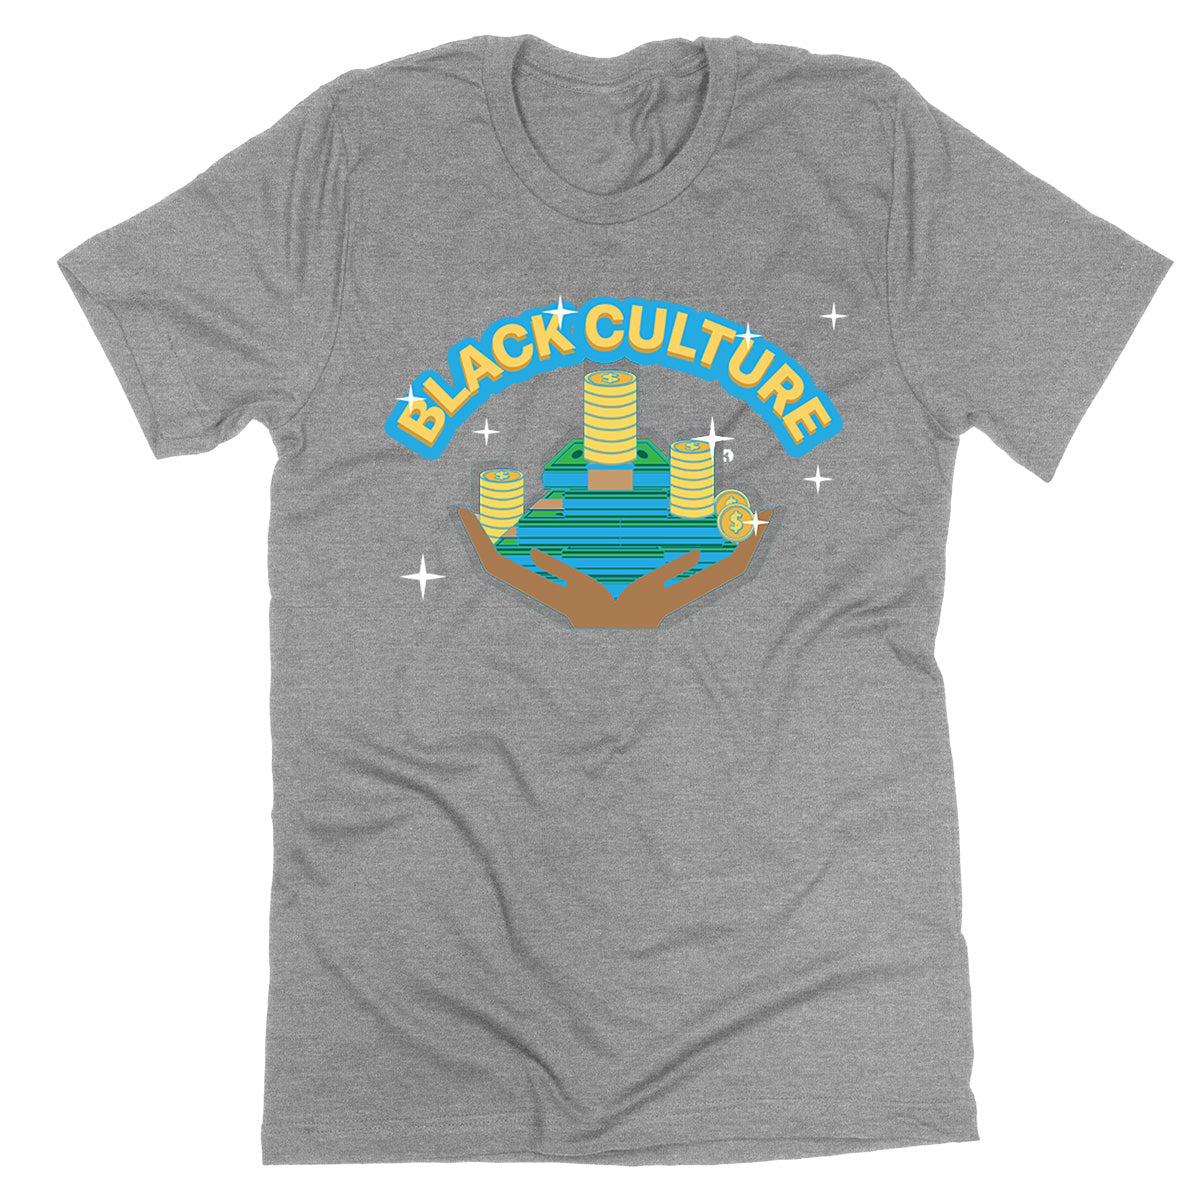 Black Culture is Rich Culture T-shirt